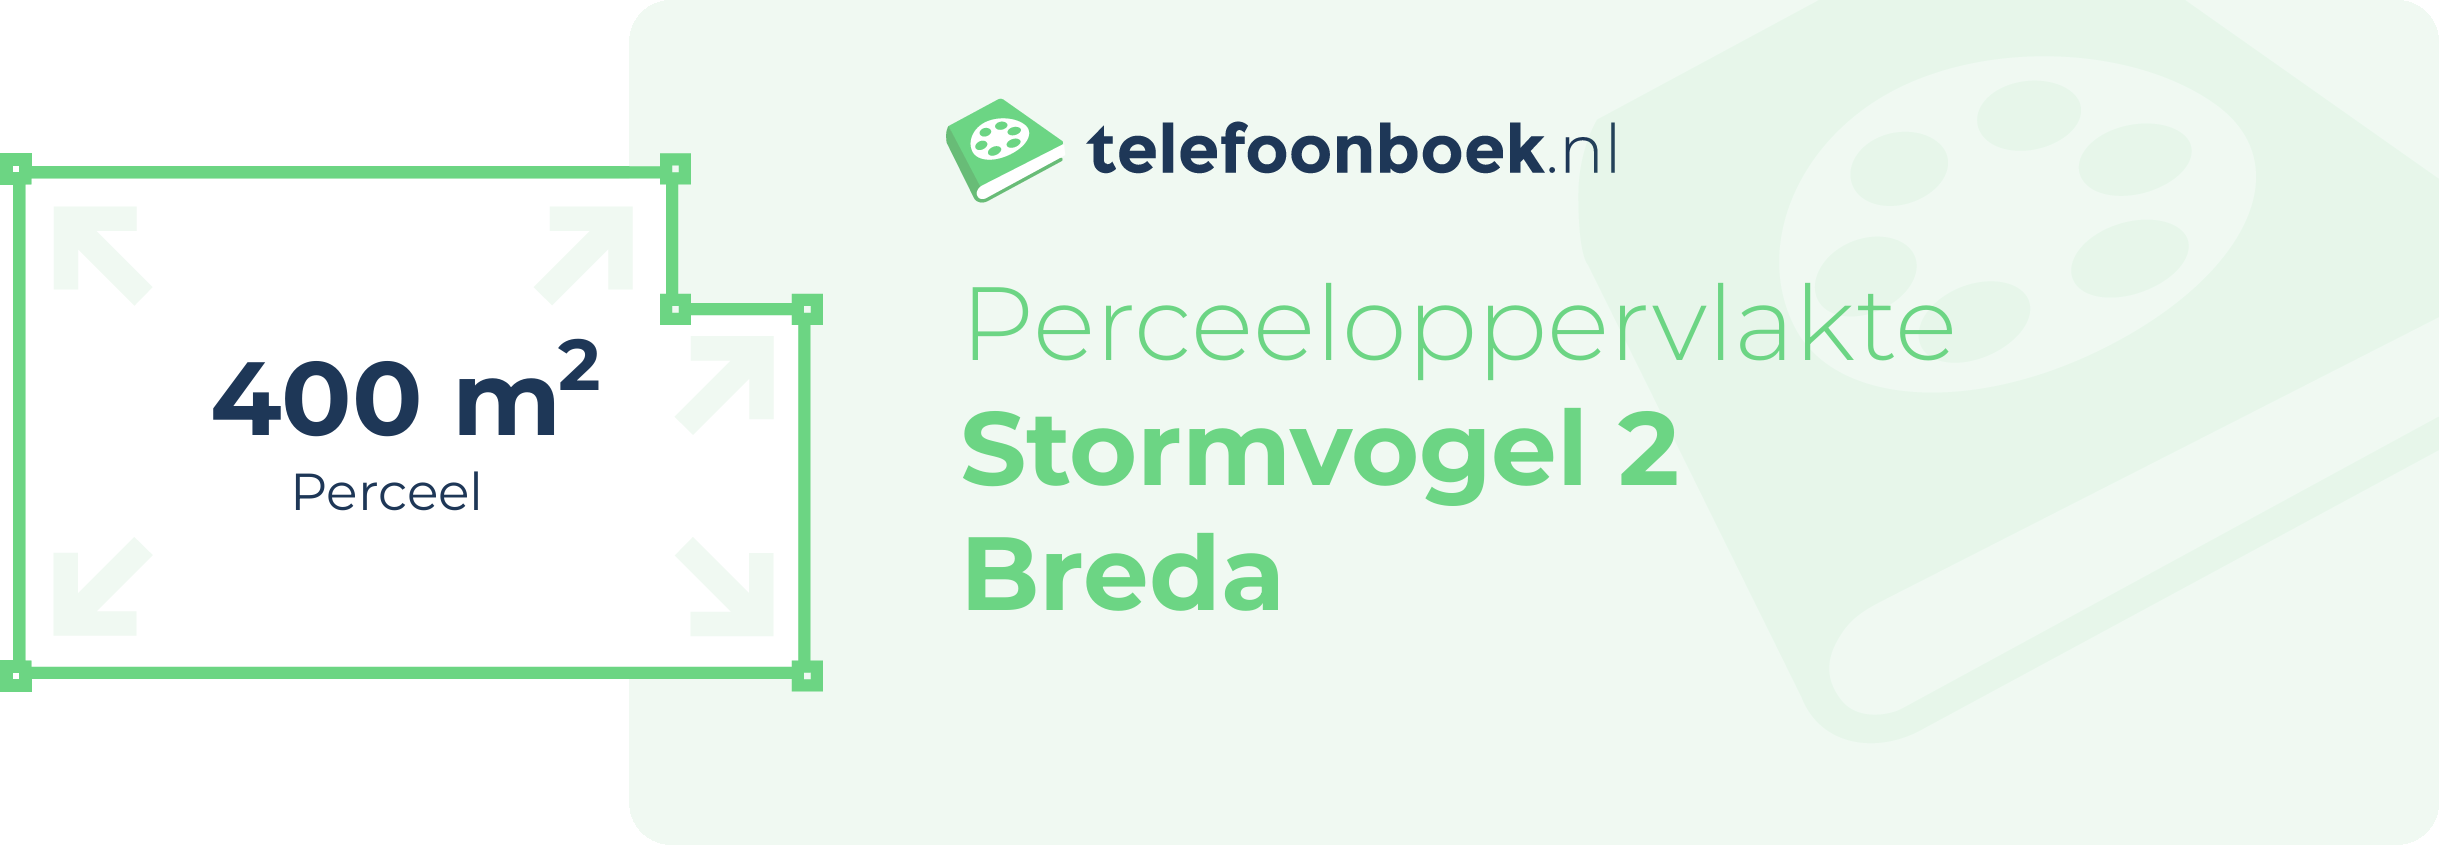 Perceeloppervlakte Stormvogel 2 Breda